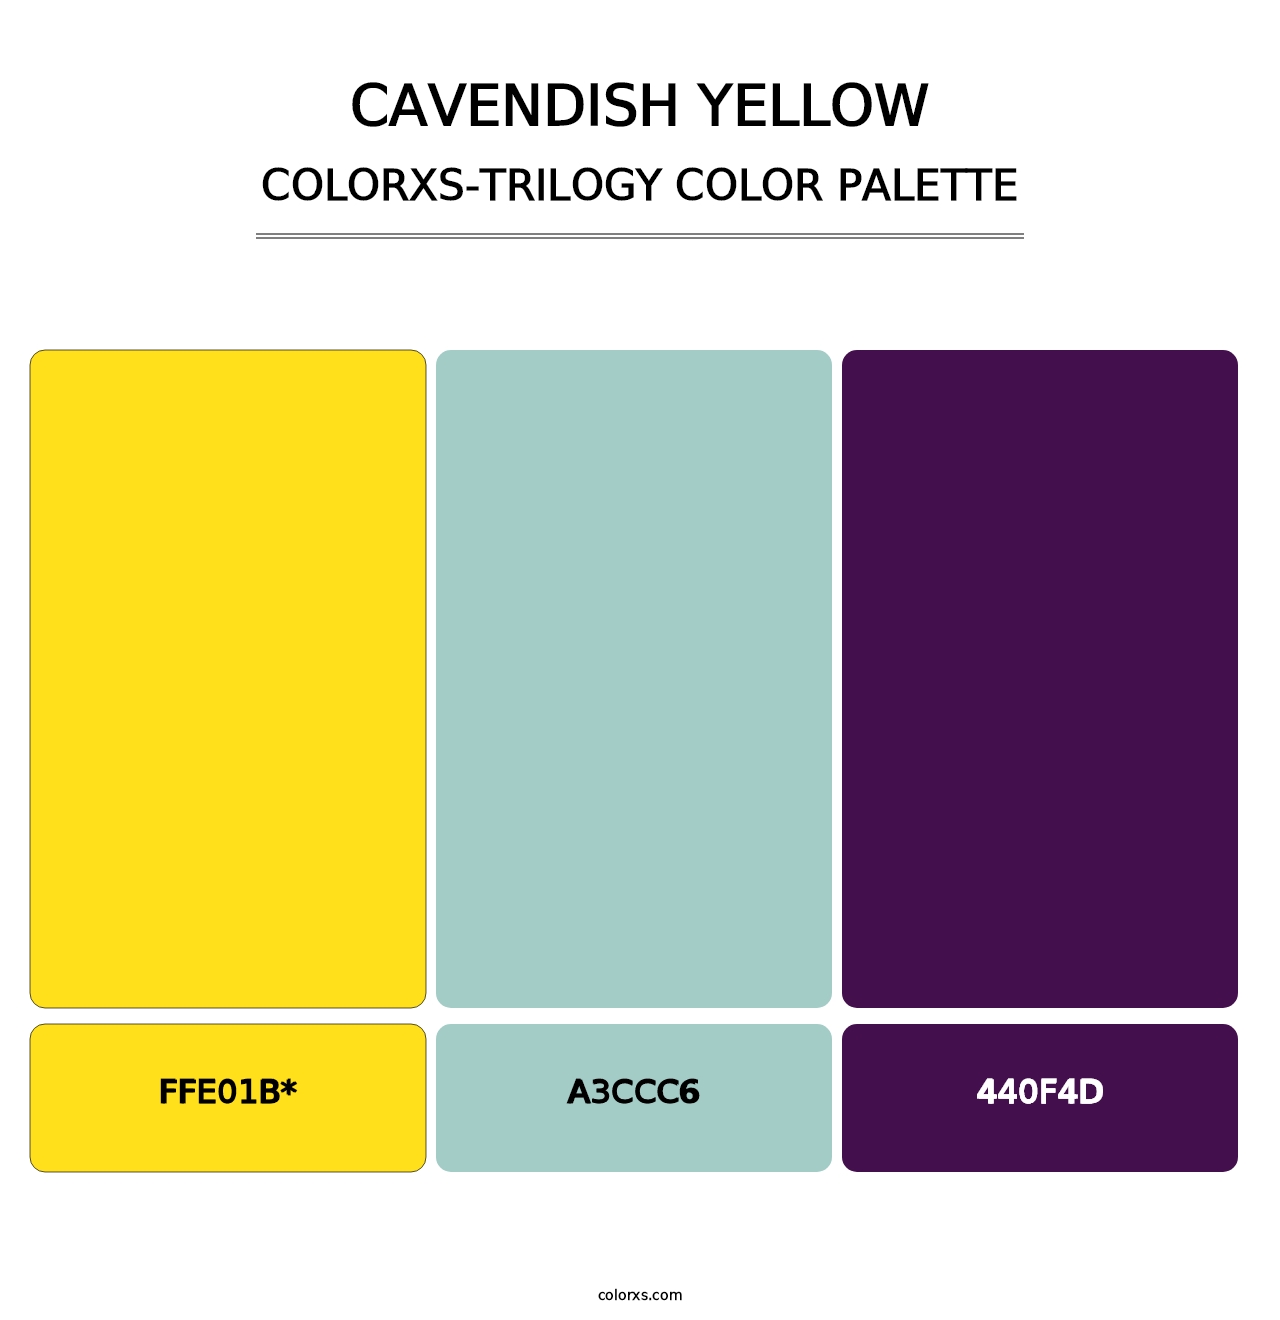 Cavendish Yellow - Colorxs Trilogy Palette